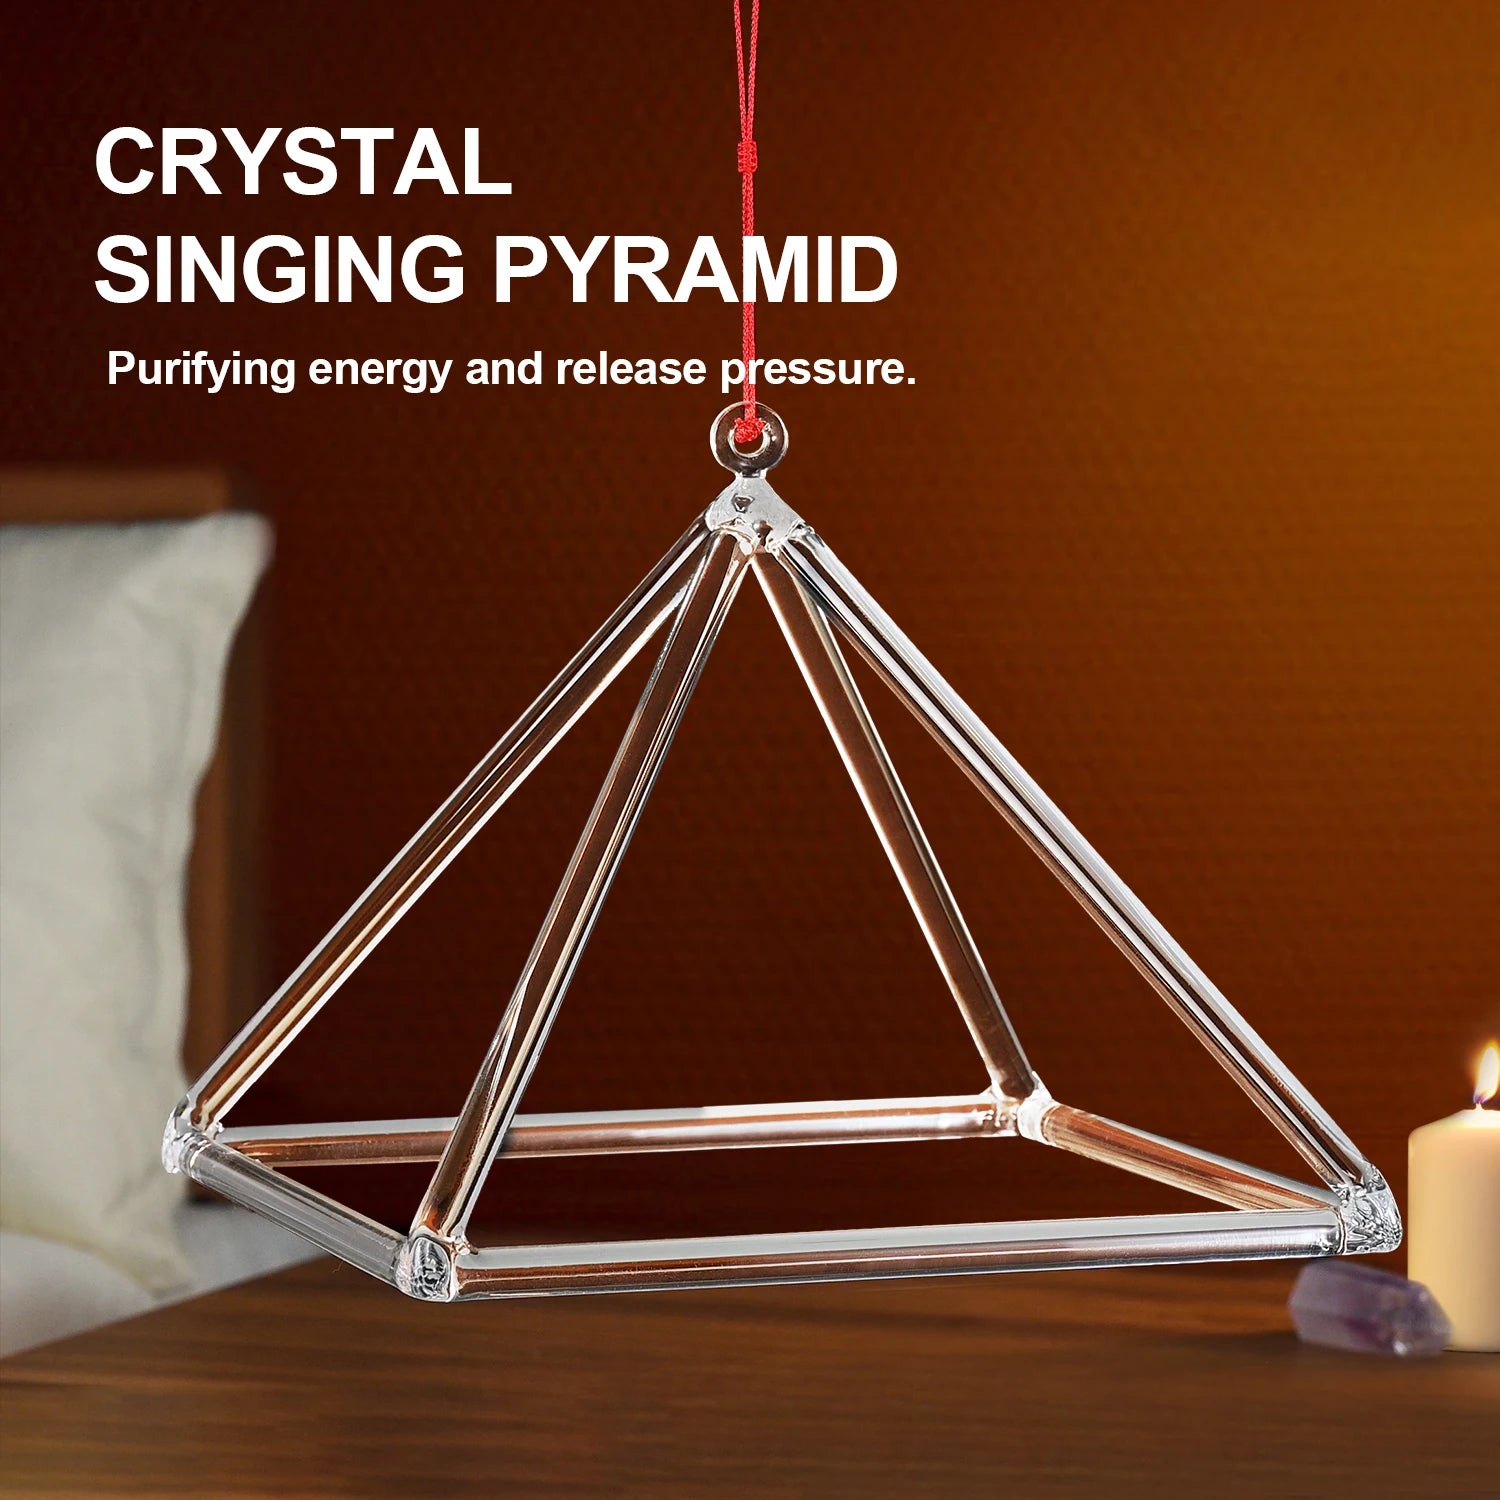 8"or 9" Crystal Singing Pyramid